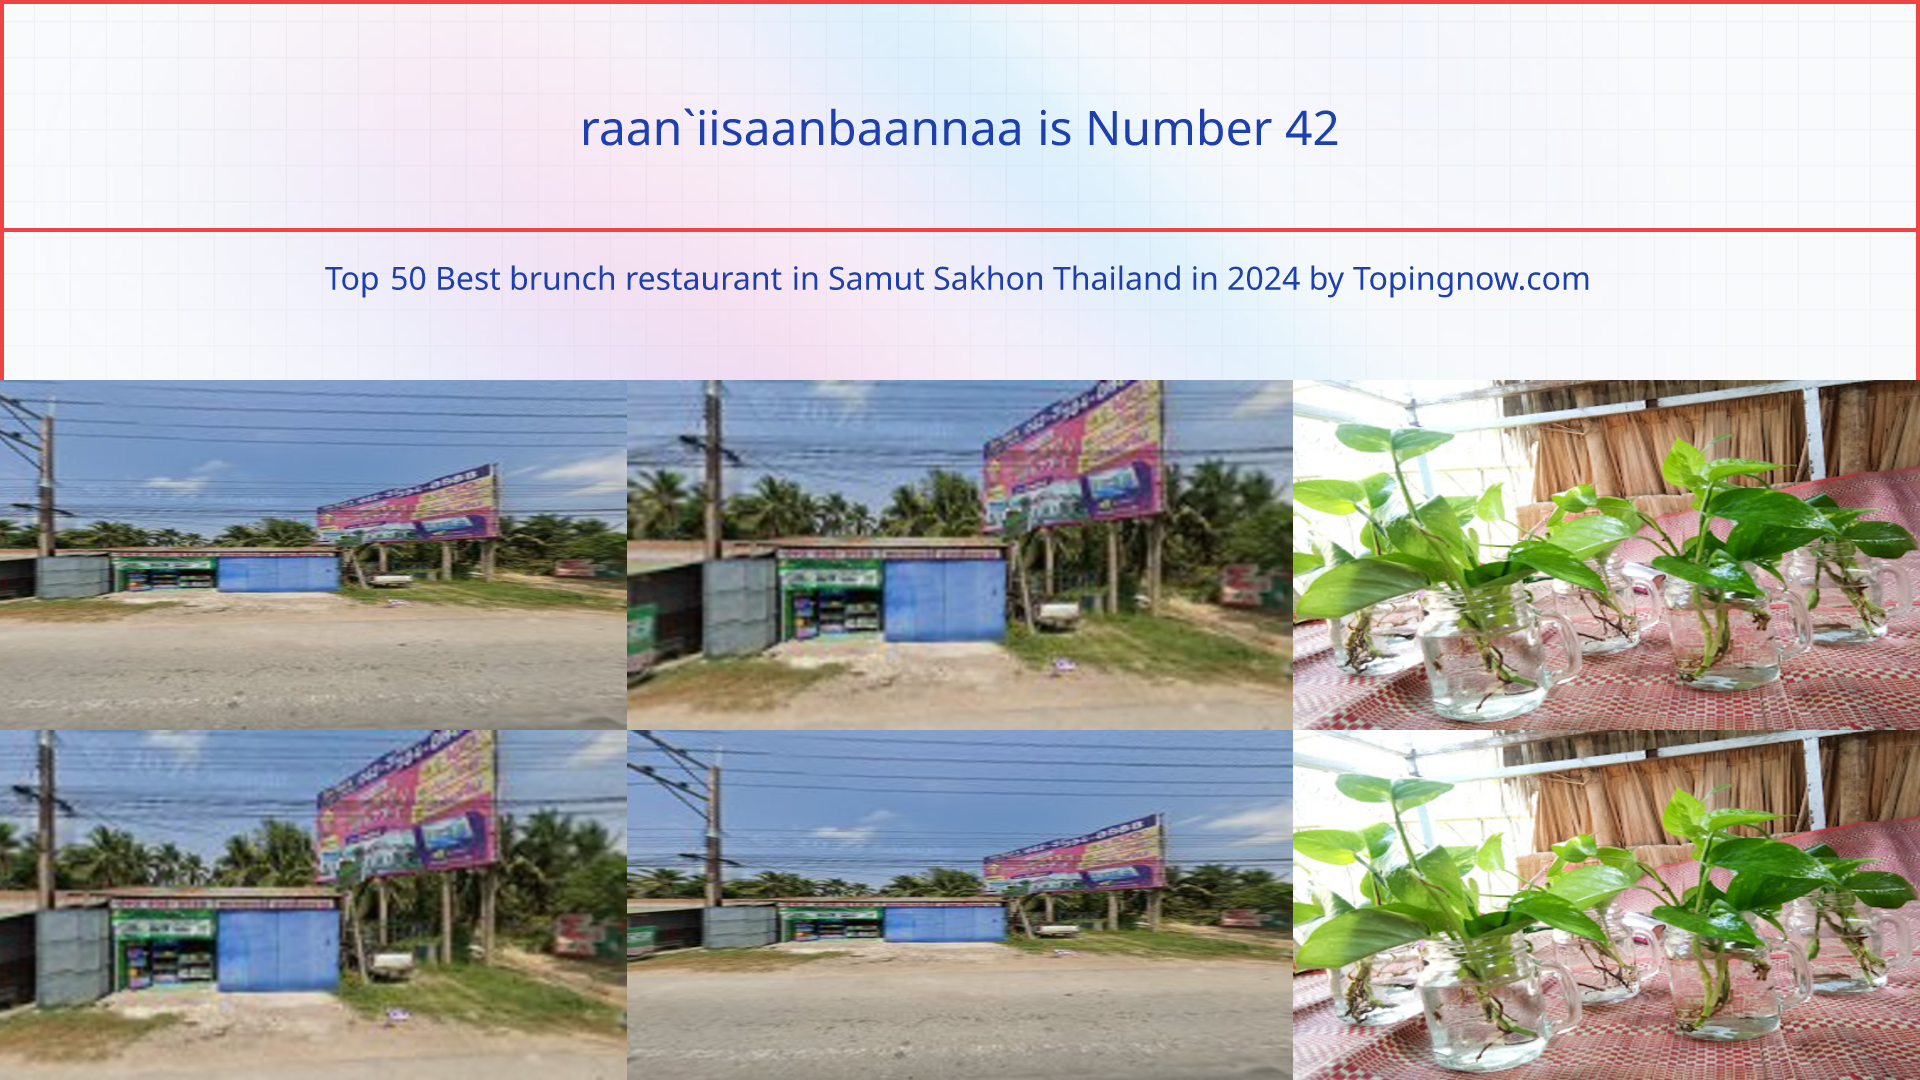 raan`iisaanbaannaa: Top 50 Best brunch restaurant in Samut Sakhon Thailand in 2024